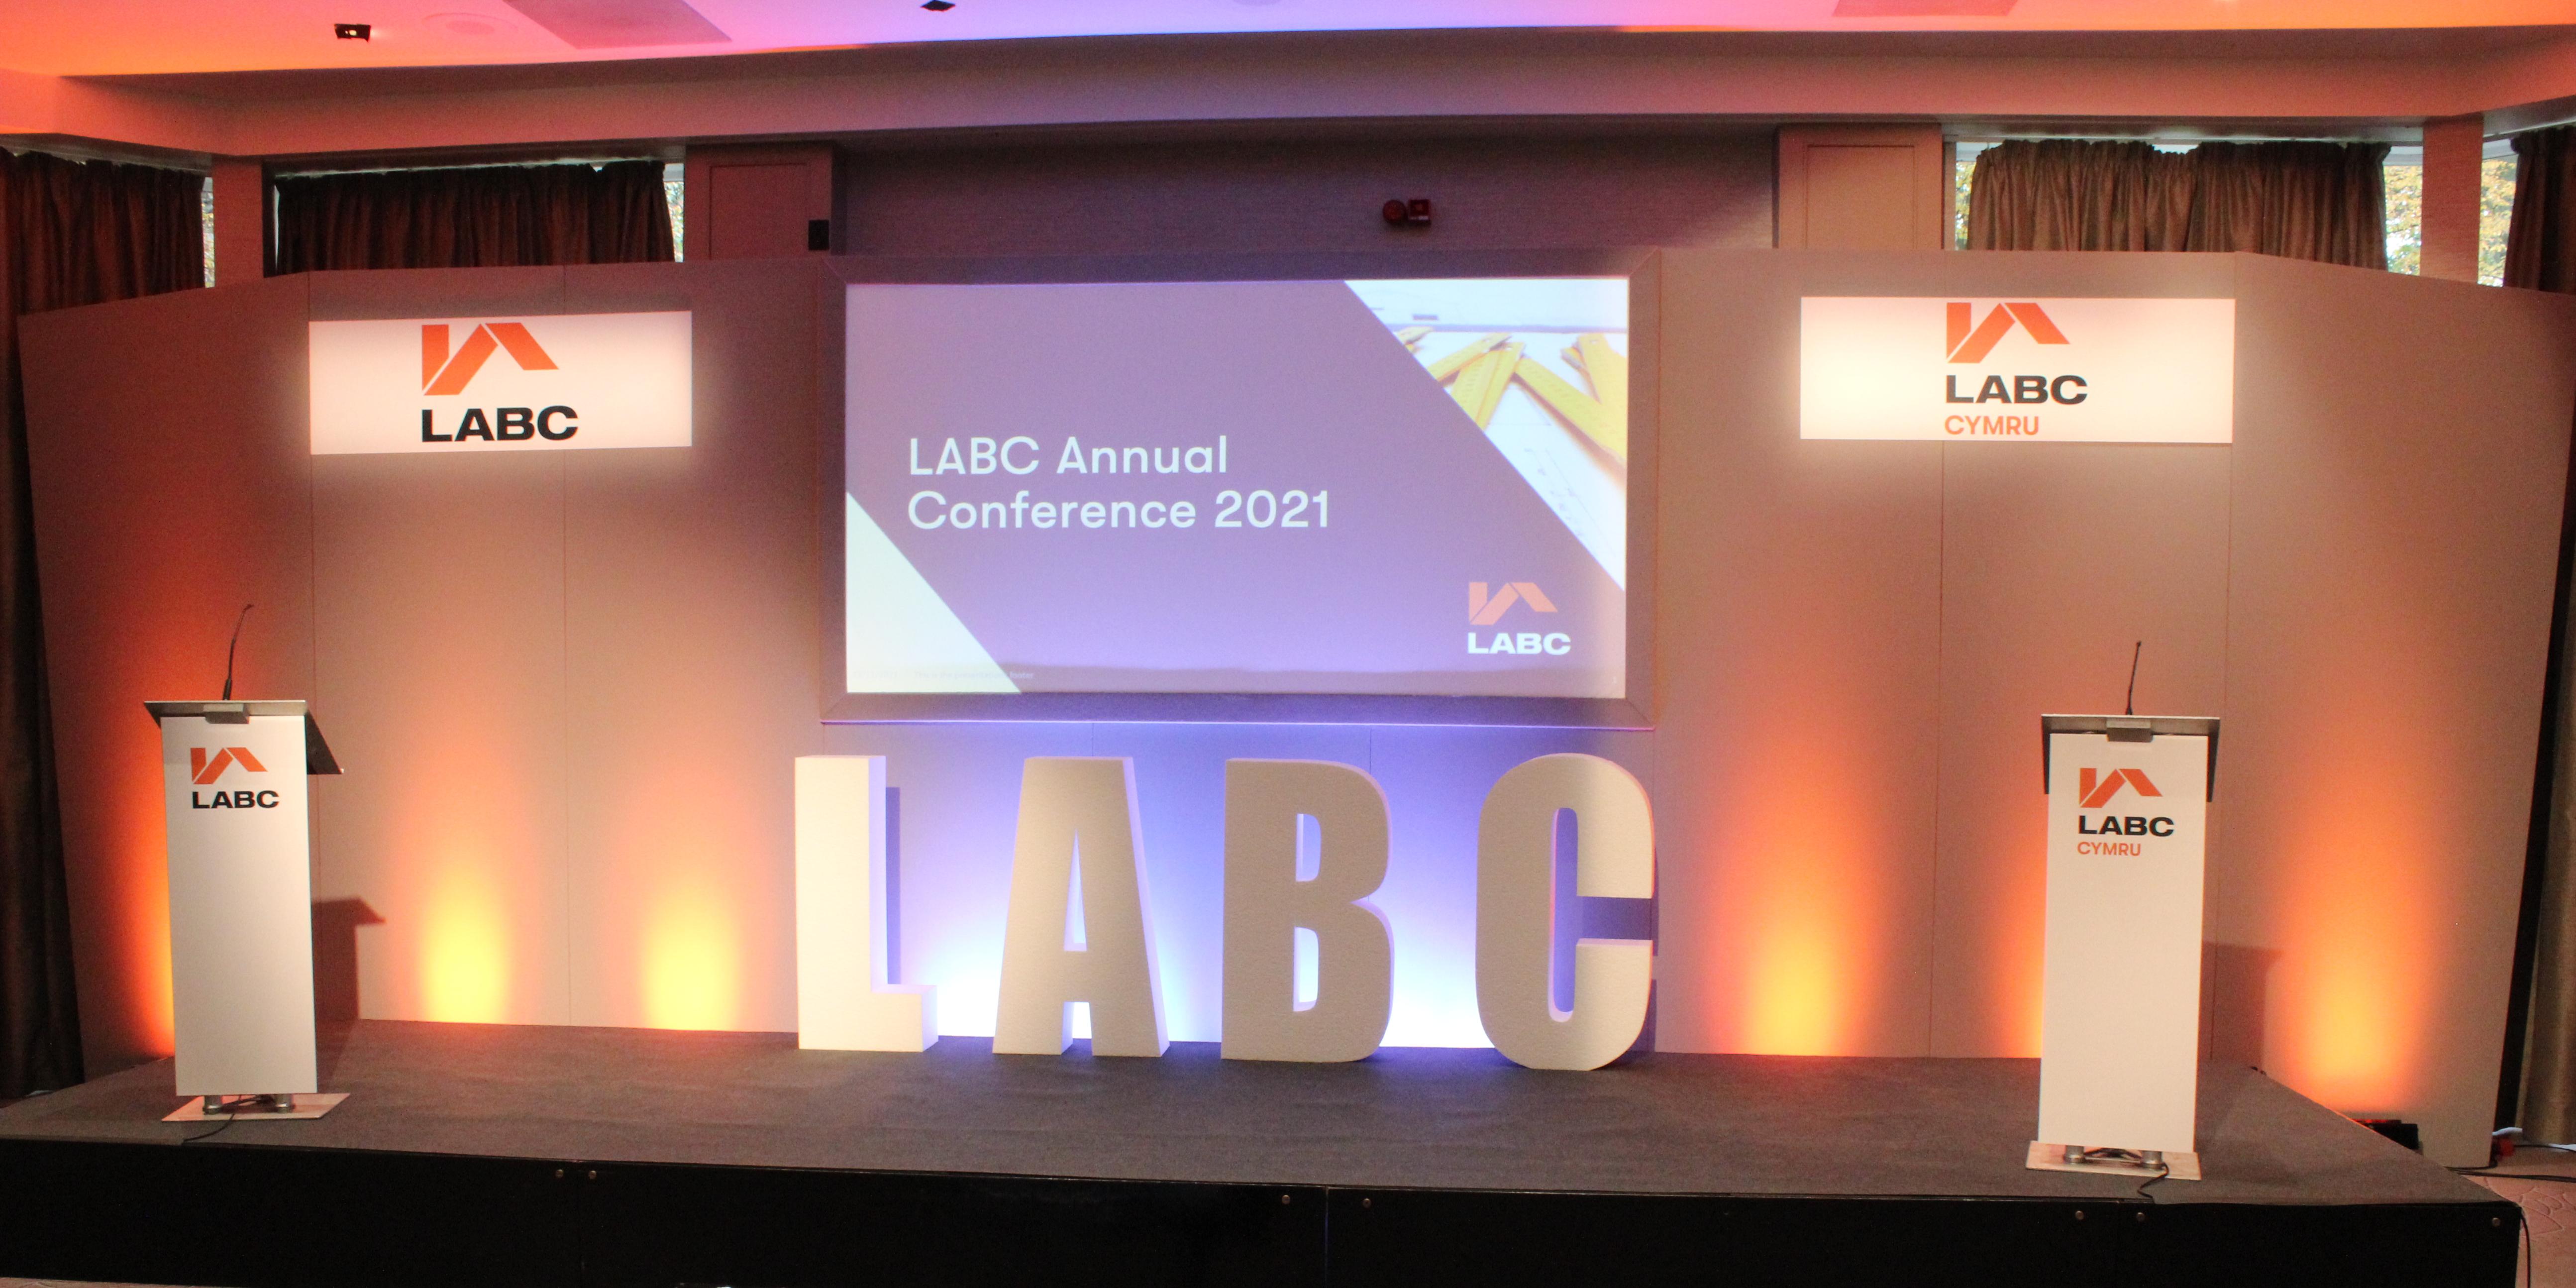 LABC Conference 2021